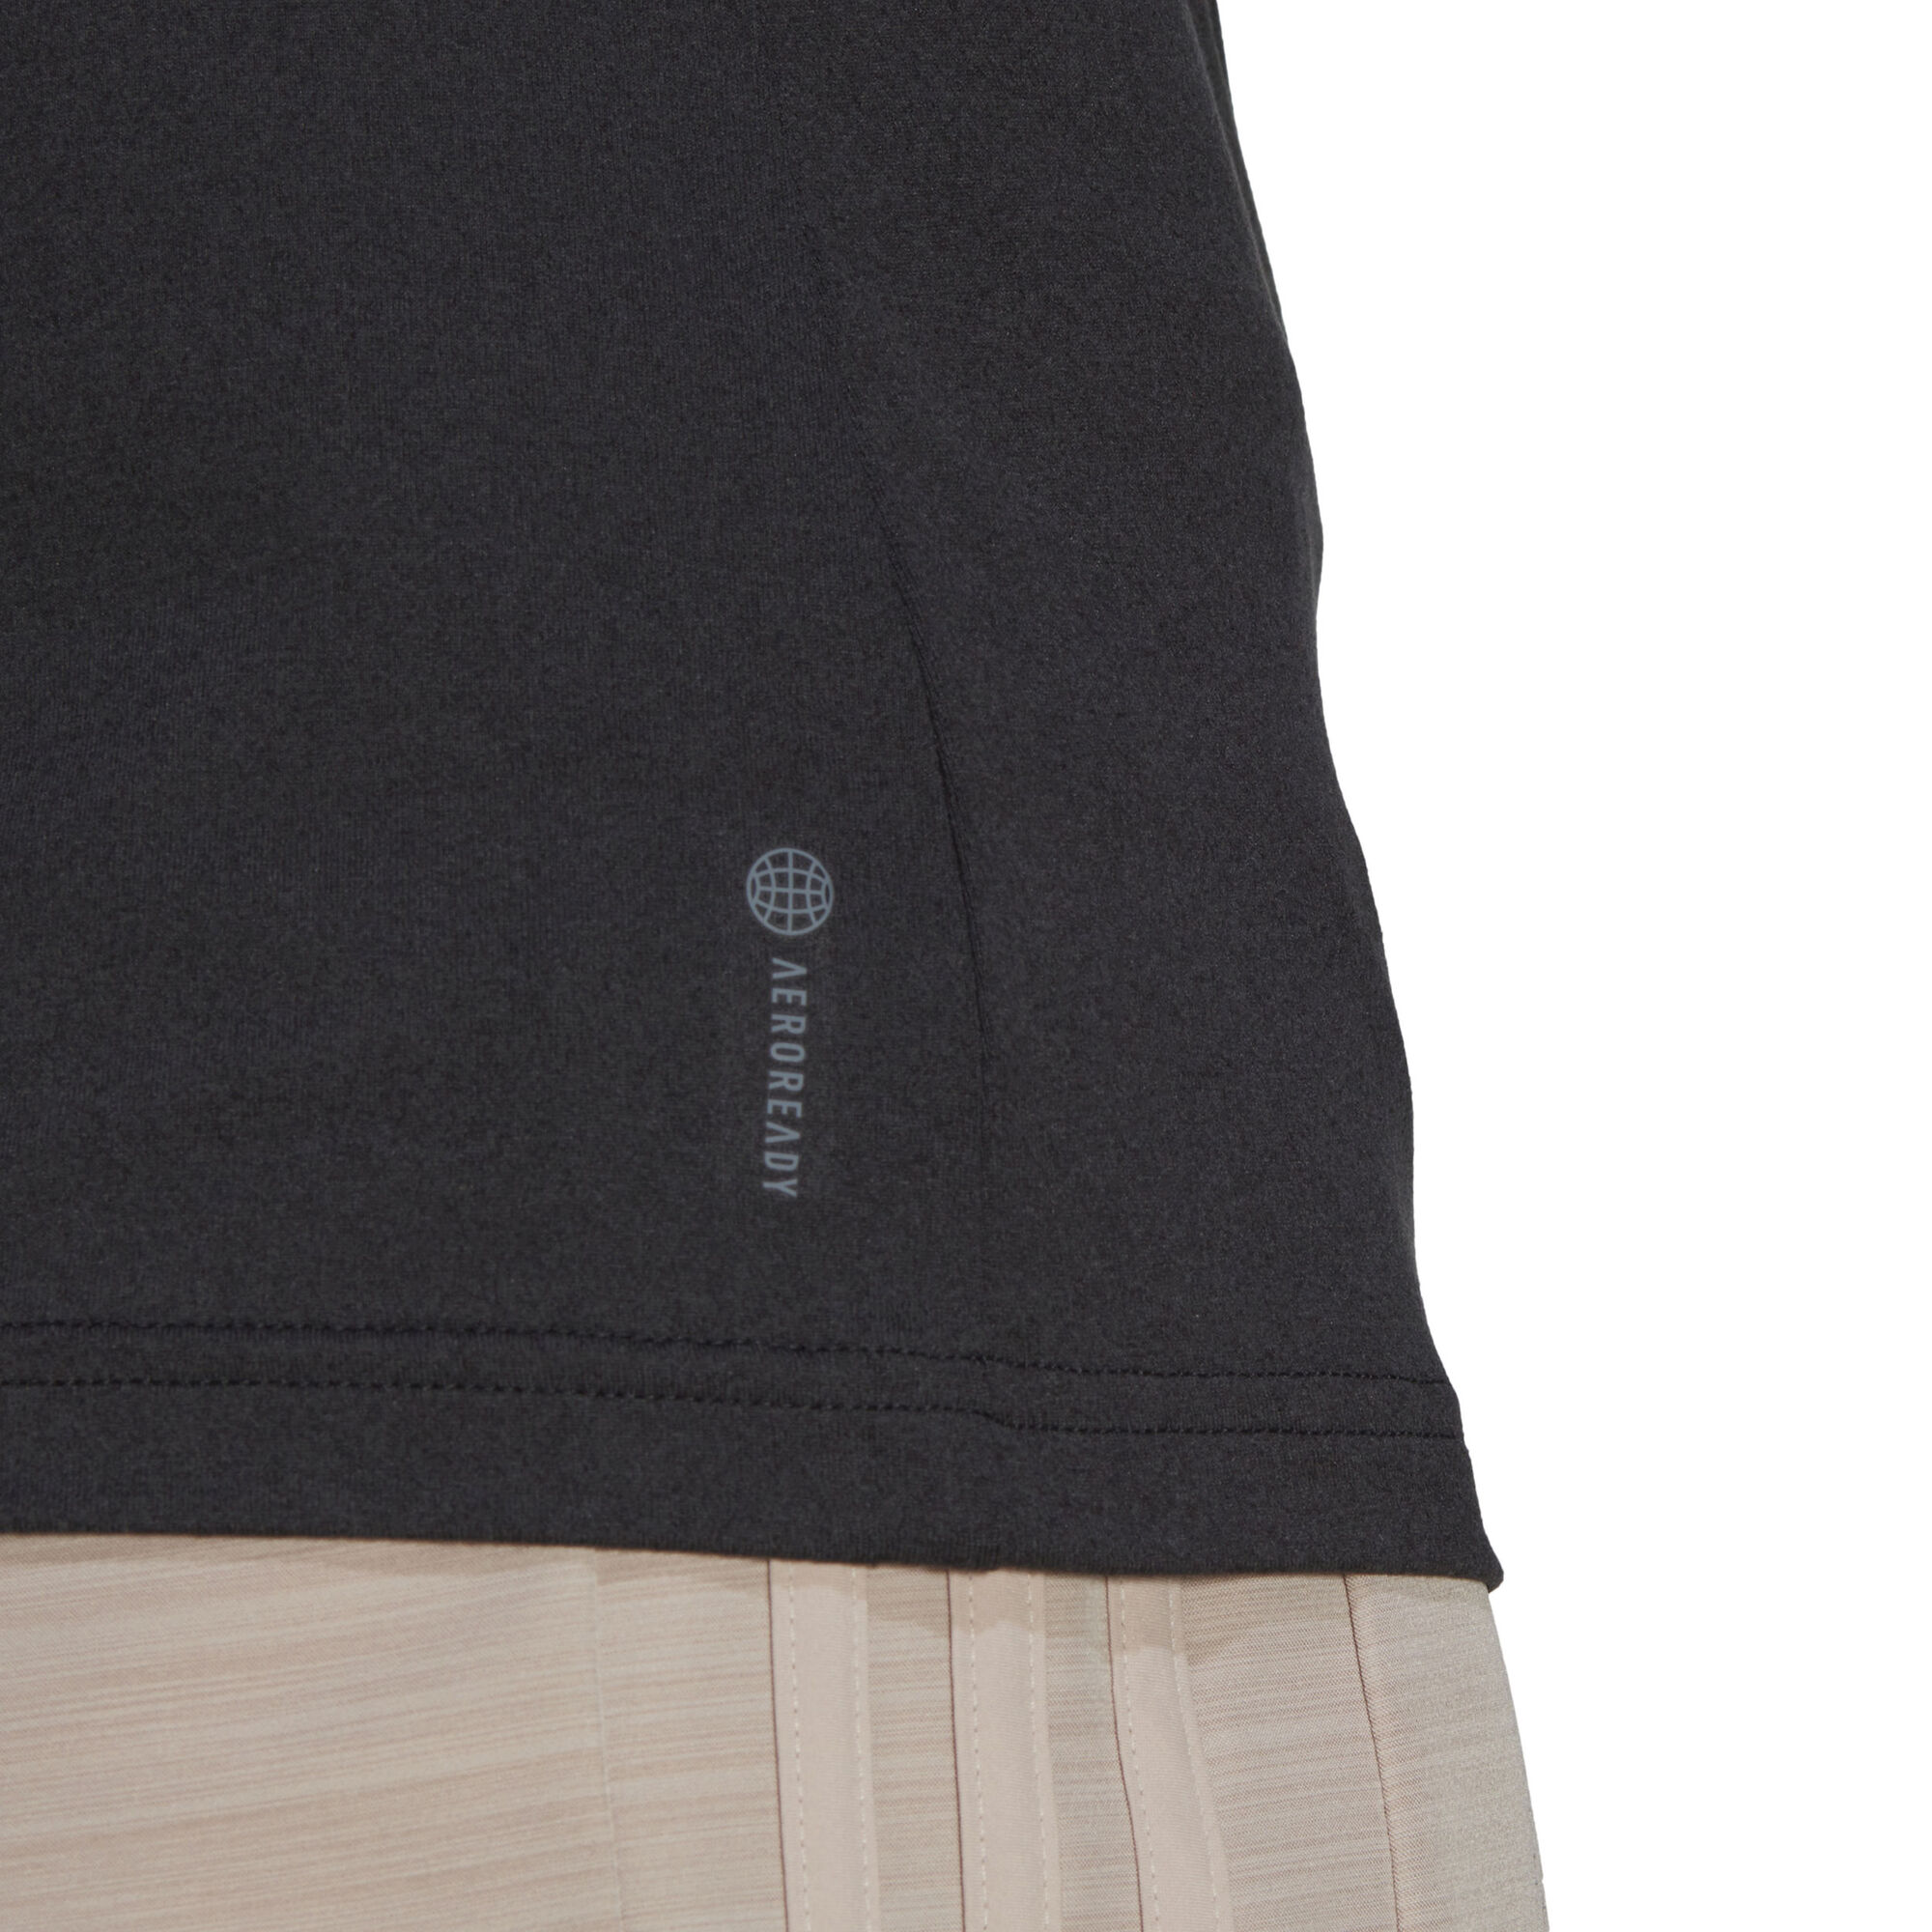 Black Minimal Women COM Train V-Neck Point Buy online Tennis Essentials | AEROREADY adidas Branding T-Shirt